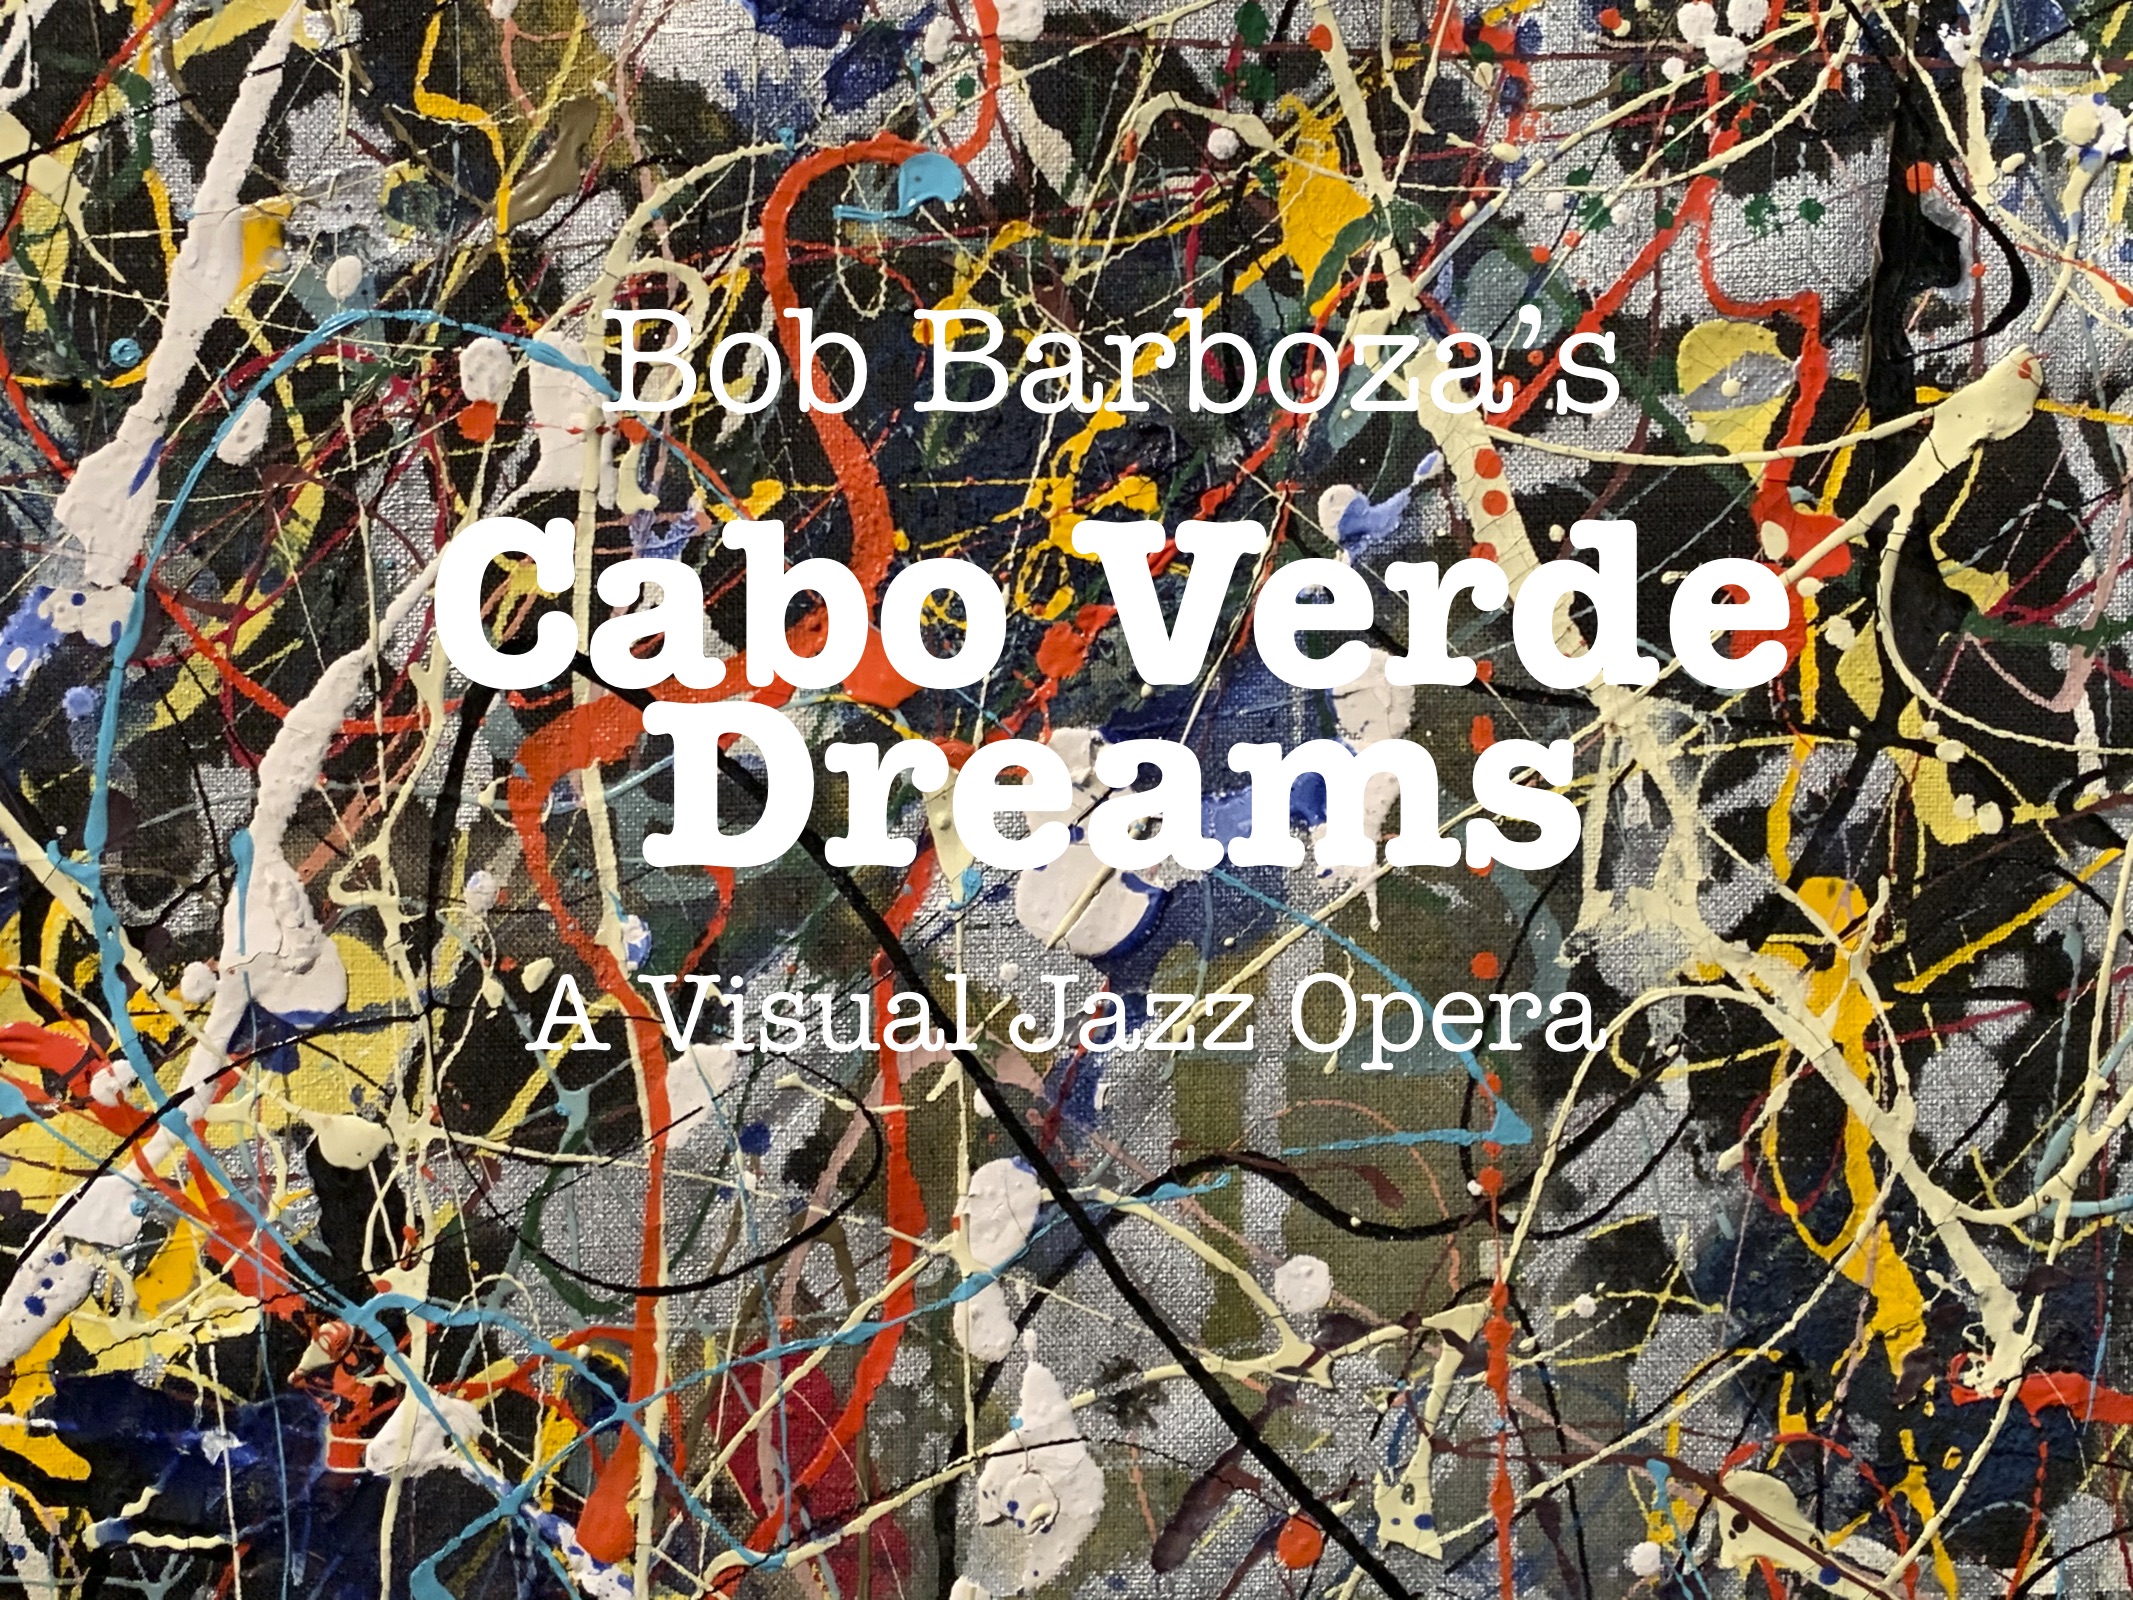  Cabo Verde Dreams Jpeg Cover.jpg